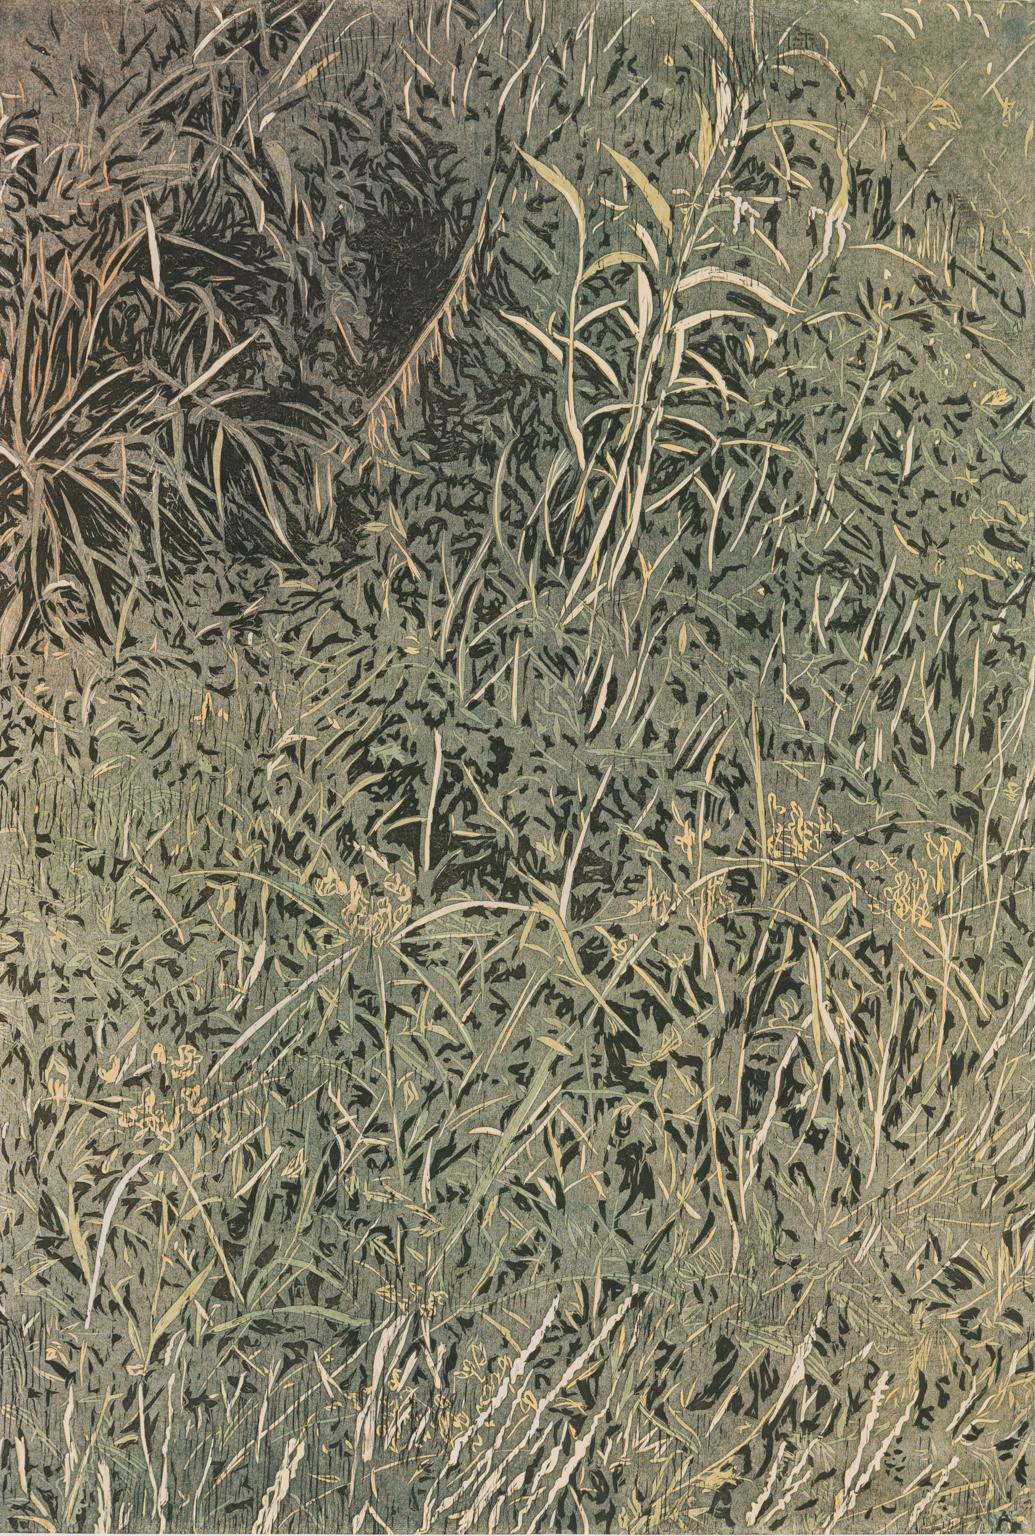 Hannah Skoonberg Landscape Print - Running Grass - Linocut Print of Overgrown Grass in Greens and Yellow